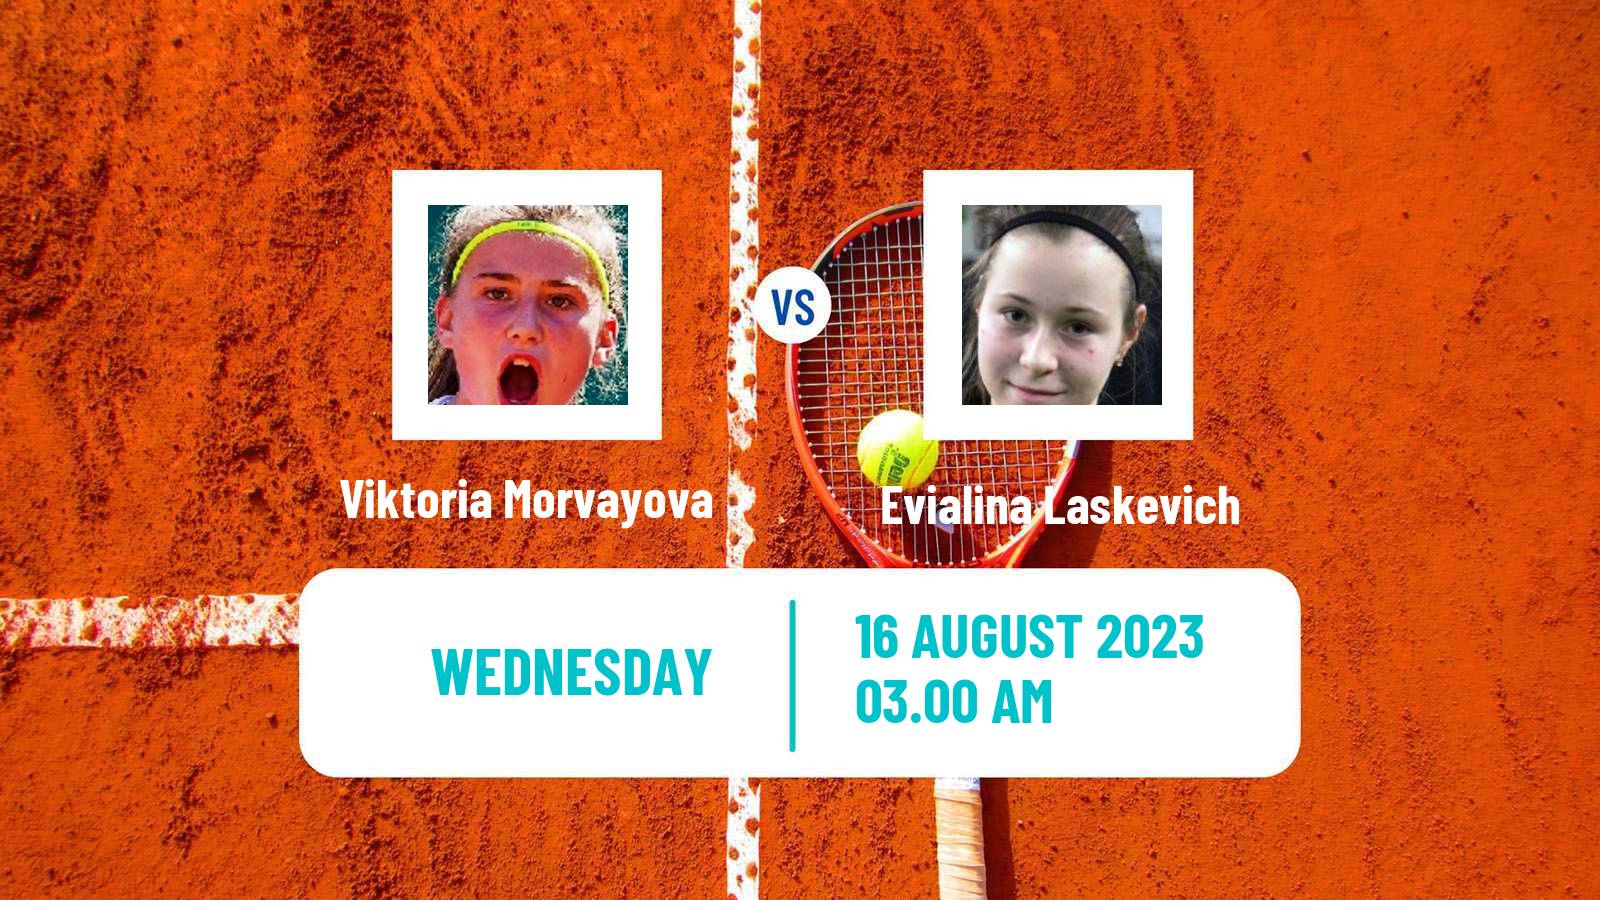 Tennis ITF W25 Bistrita Women Viktoria Morvayova - Evialina Laskevich